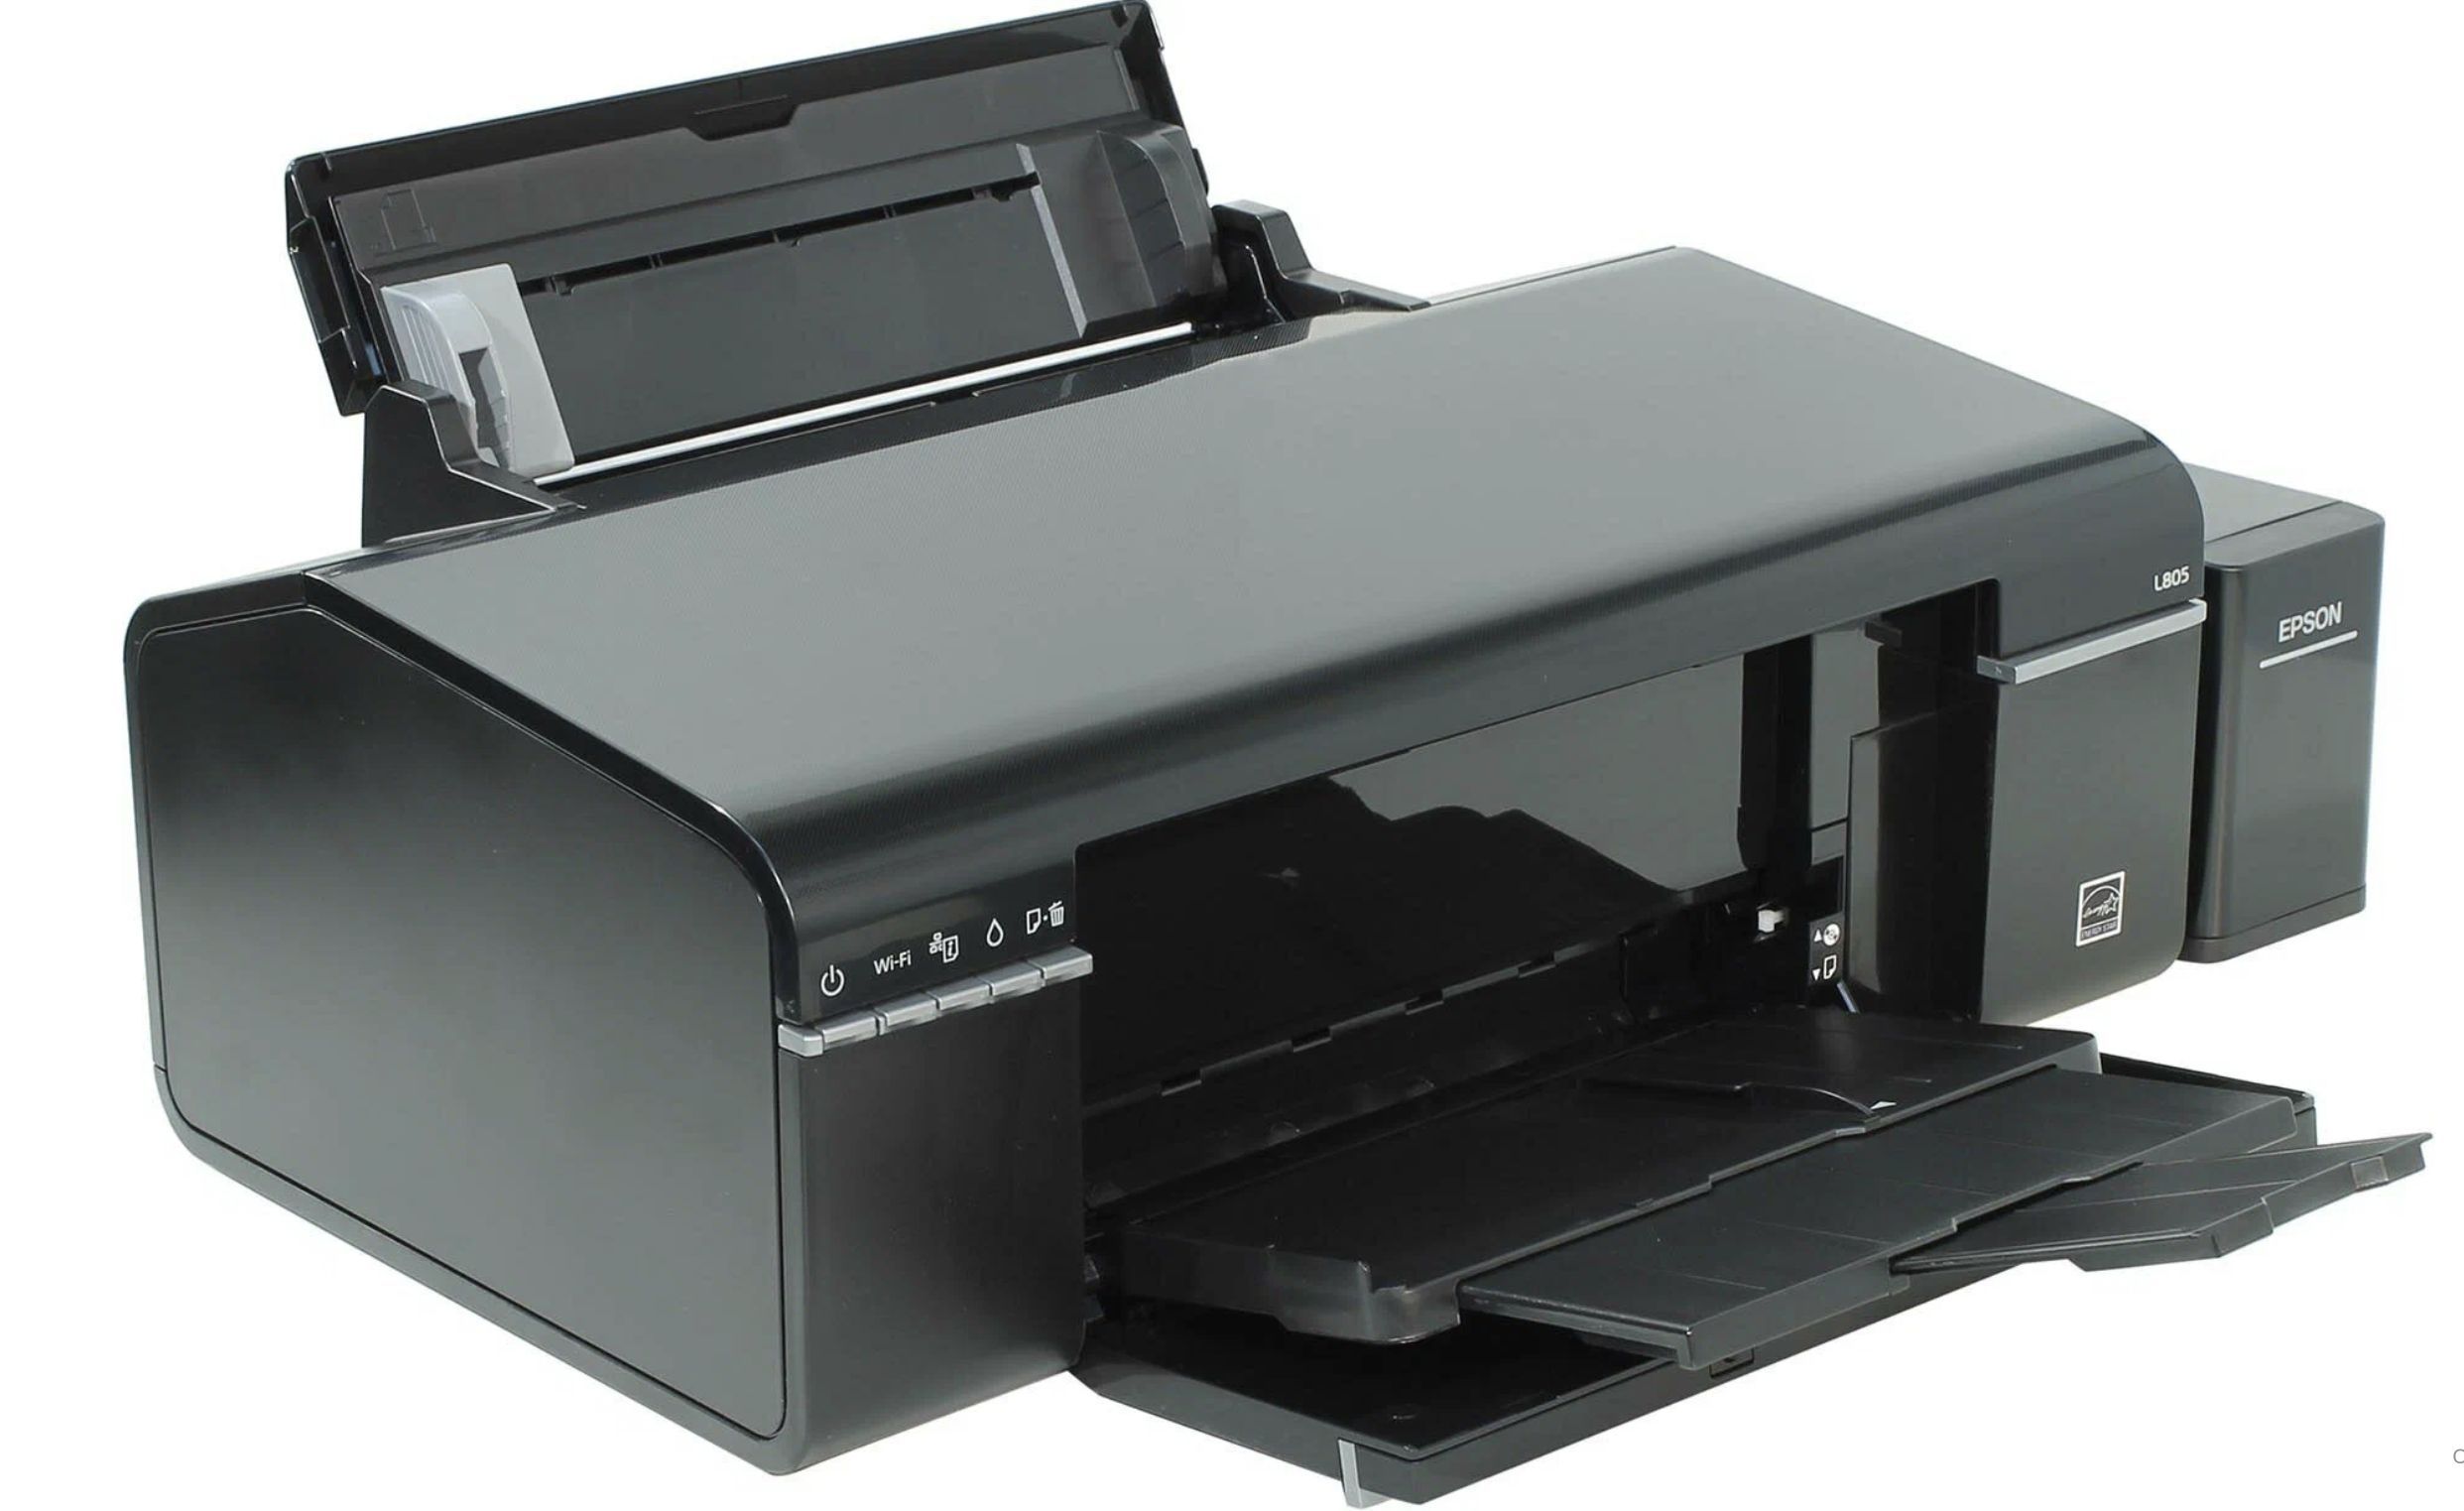 Epson l800 печать. Принтер Epson l805. Принтер Epson l805 Black. Принтер струйный Epson l805 цветной. Принтер струйный Epson l805, черный.